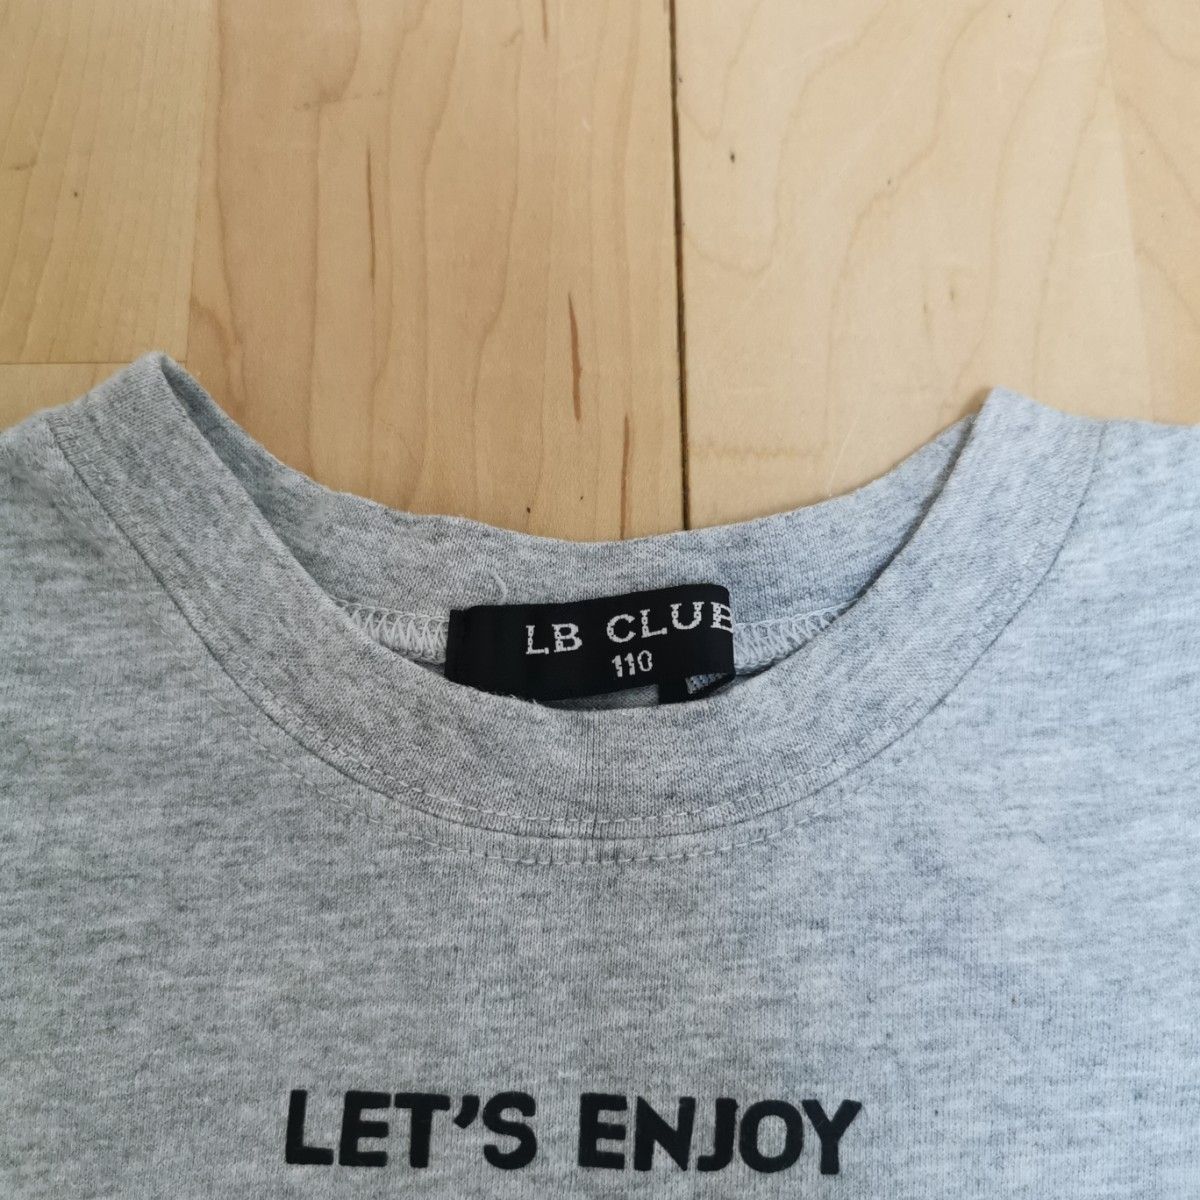 LB CLUB 丸高衣料 Tシャツ  110 120 2枚セット